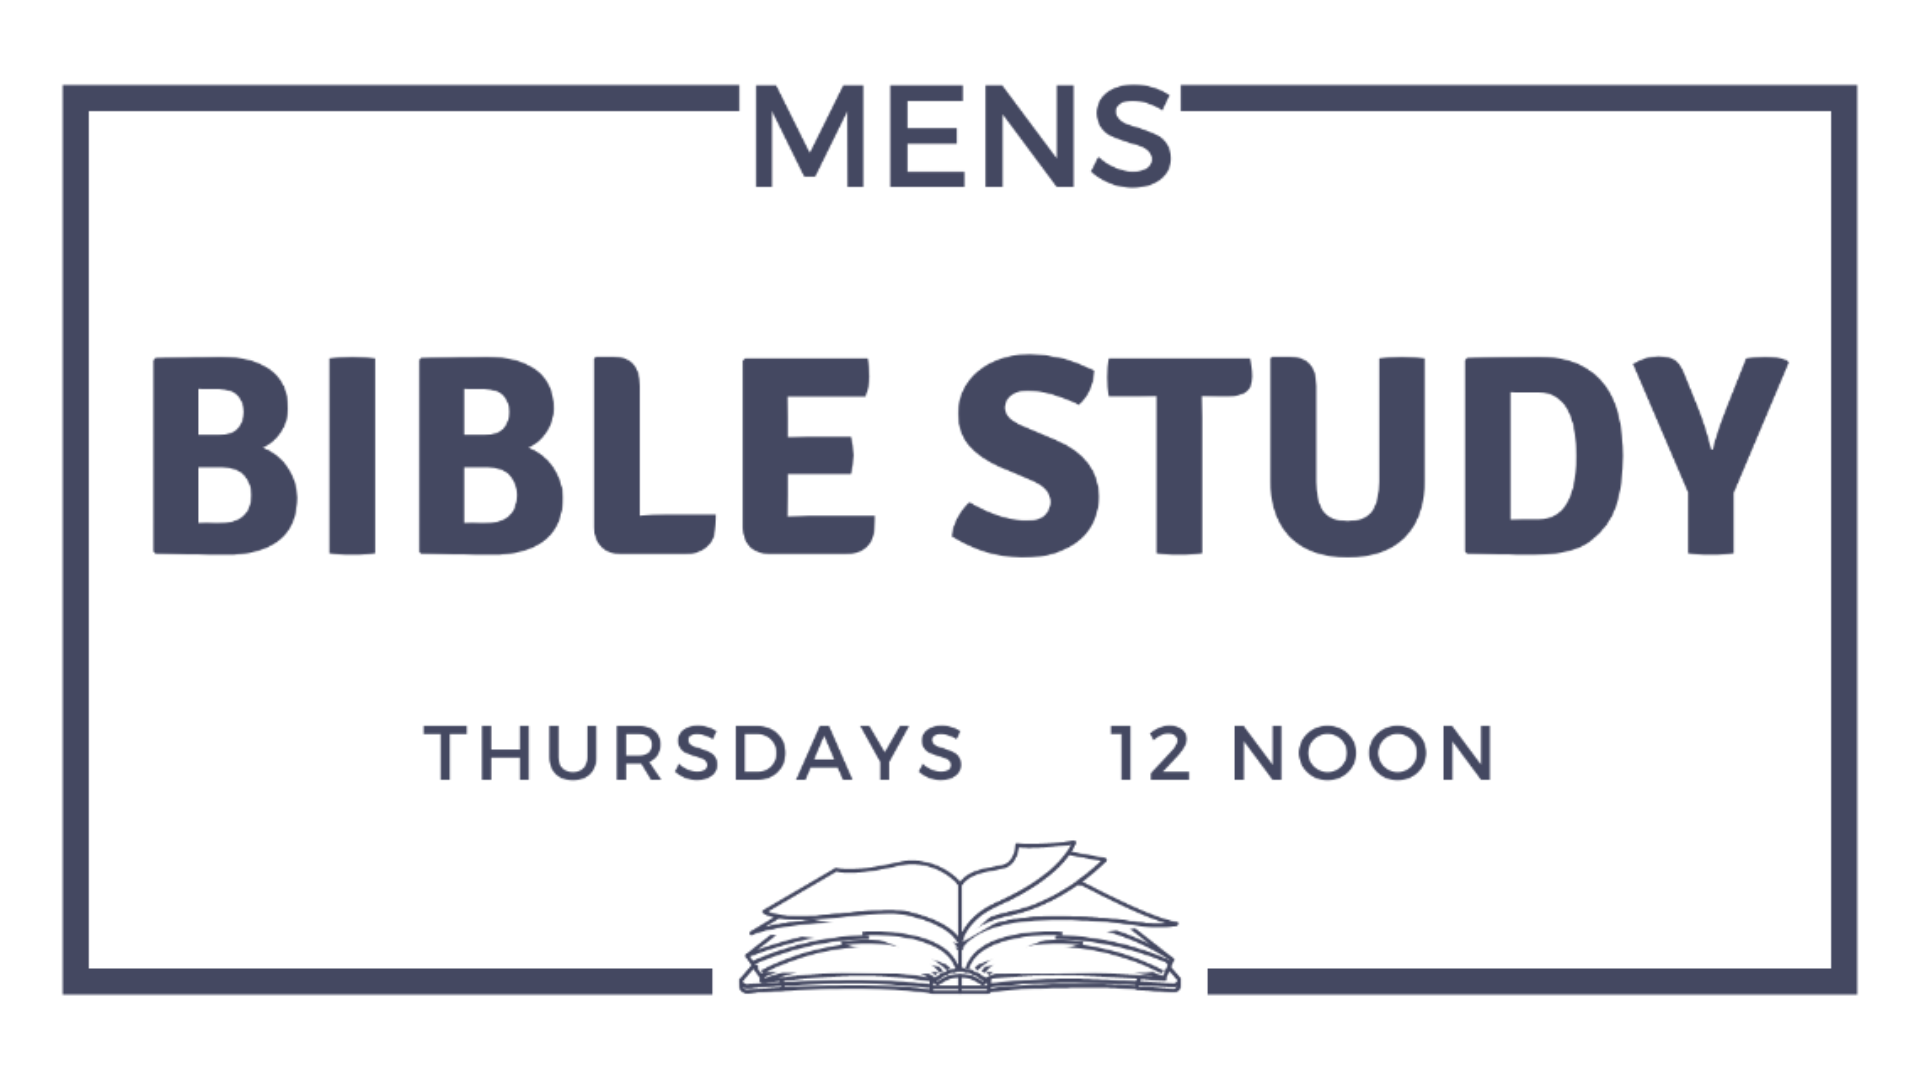 Mens Bible Study (1920 x 1080 px)